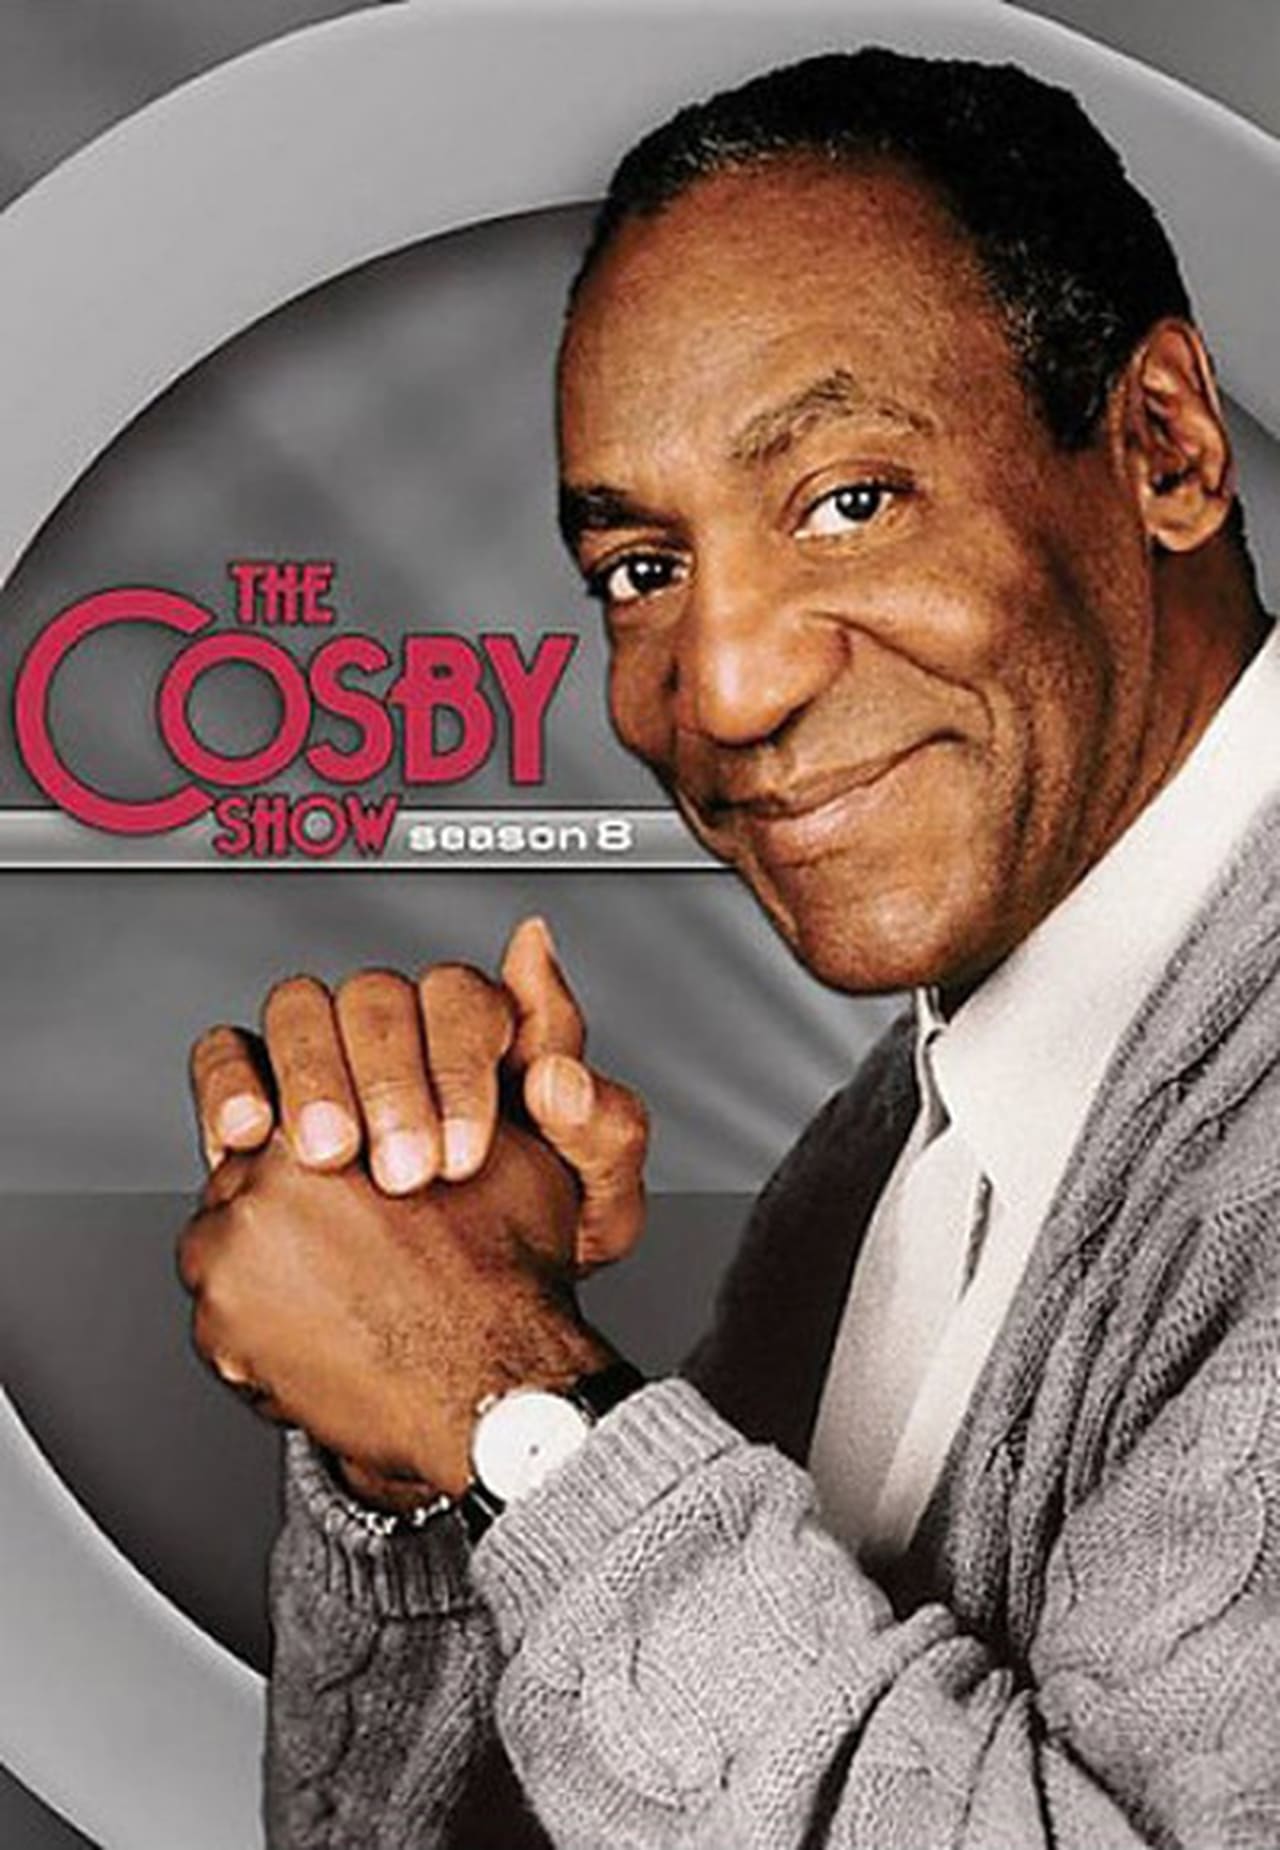 The Cosby Show Season 8